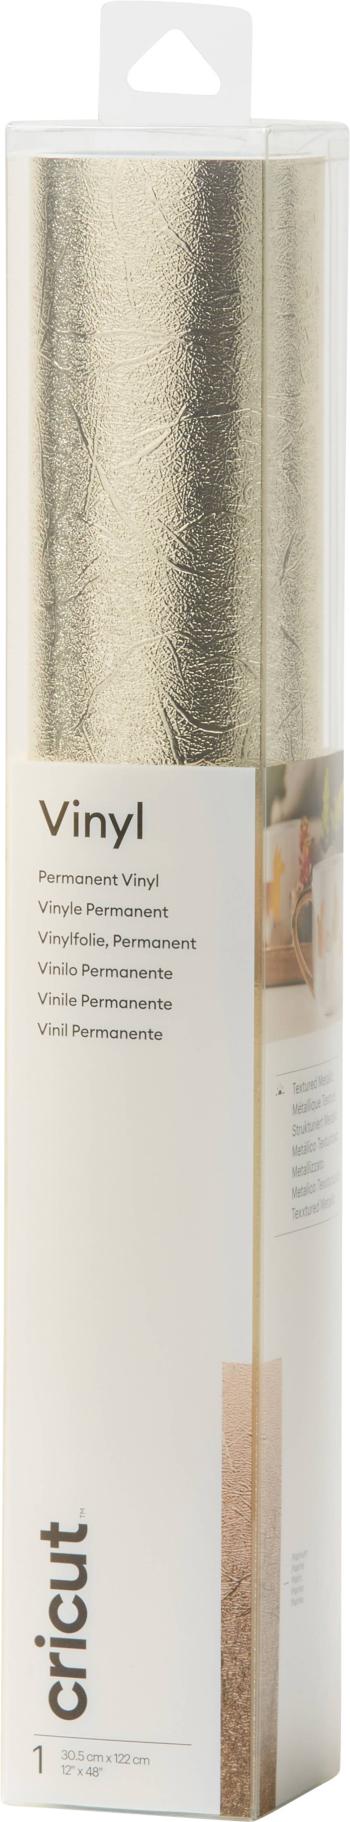 Cricut Premium Vinyl Permanent fólie  platina